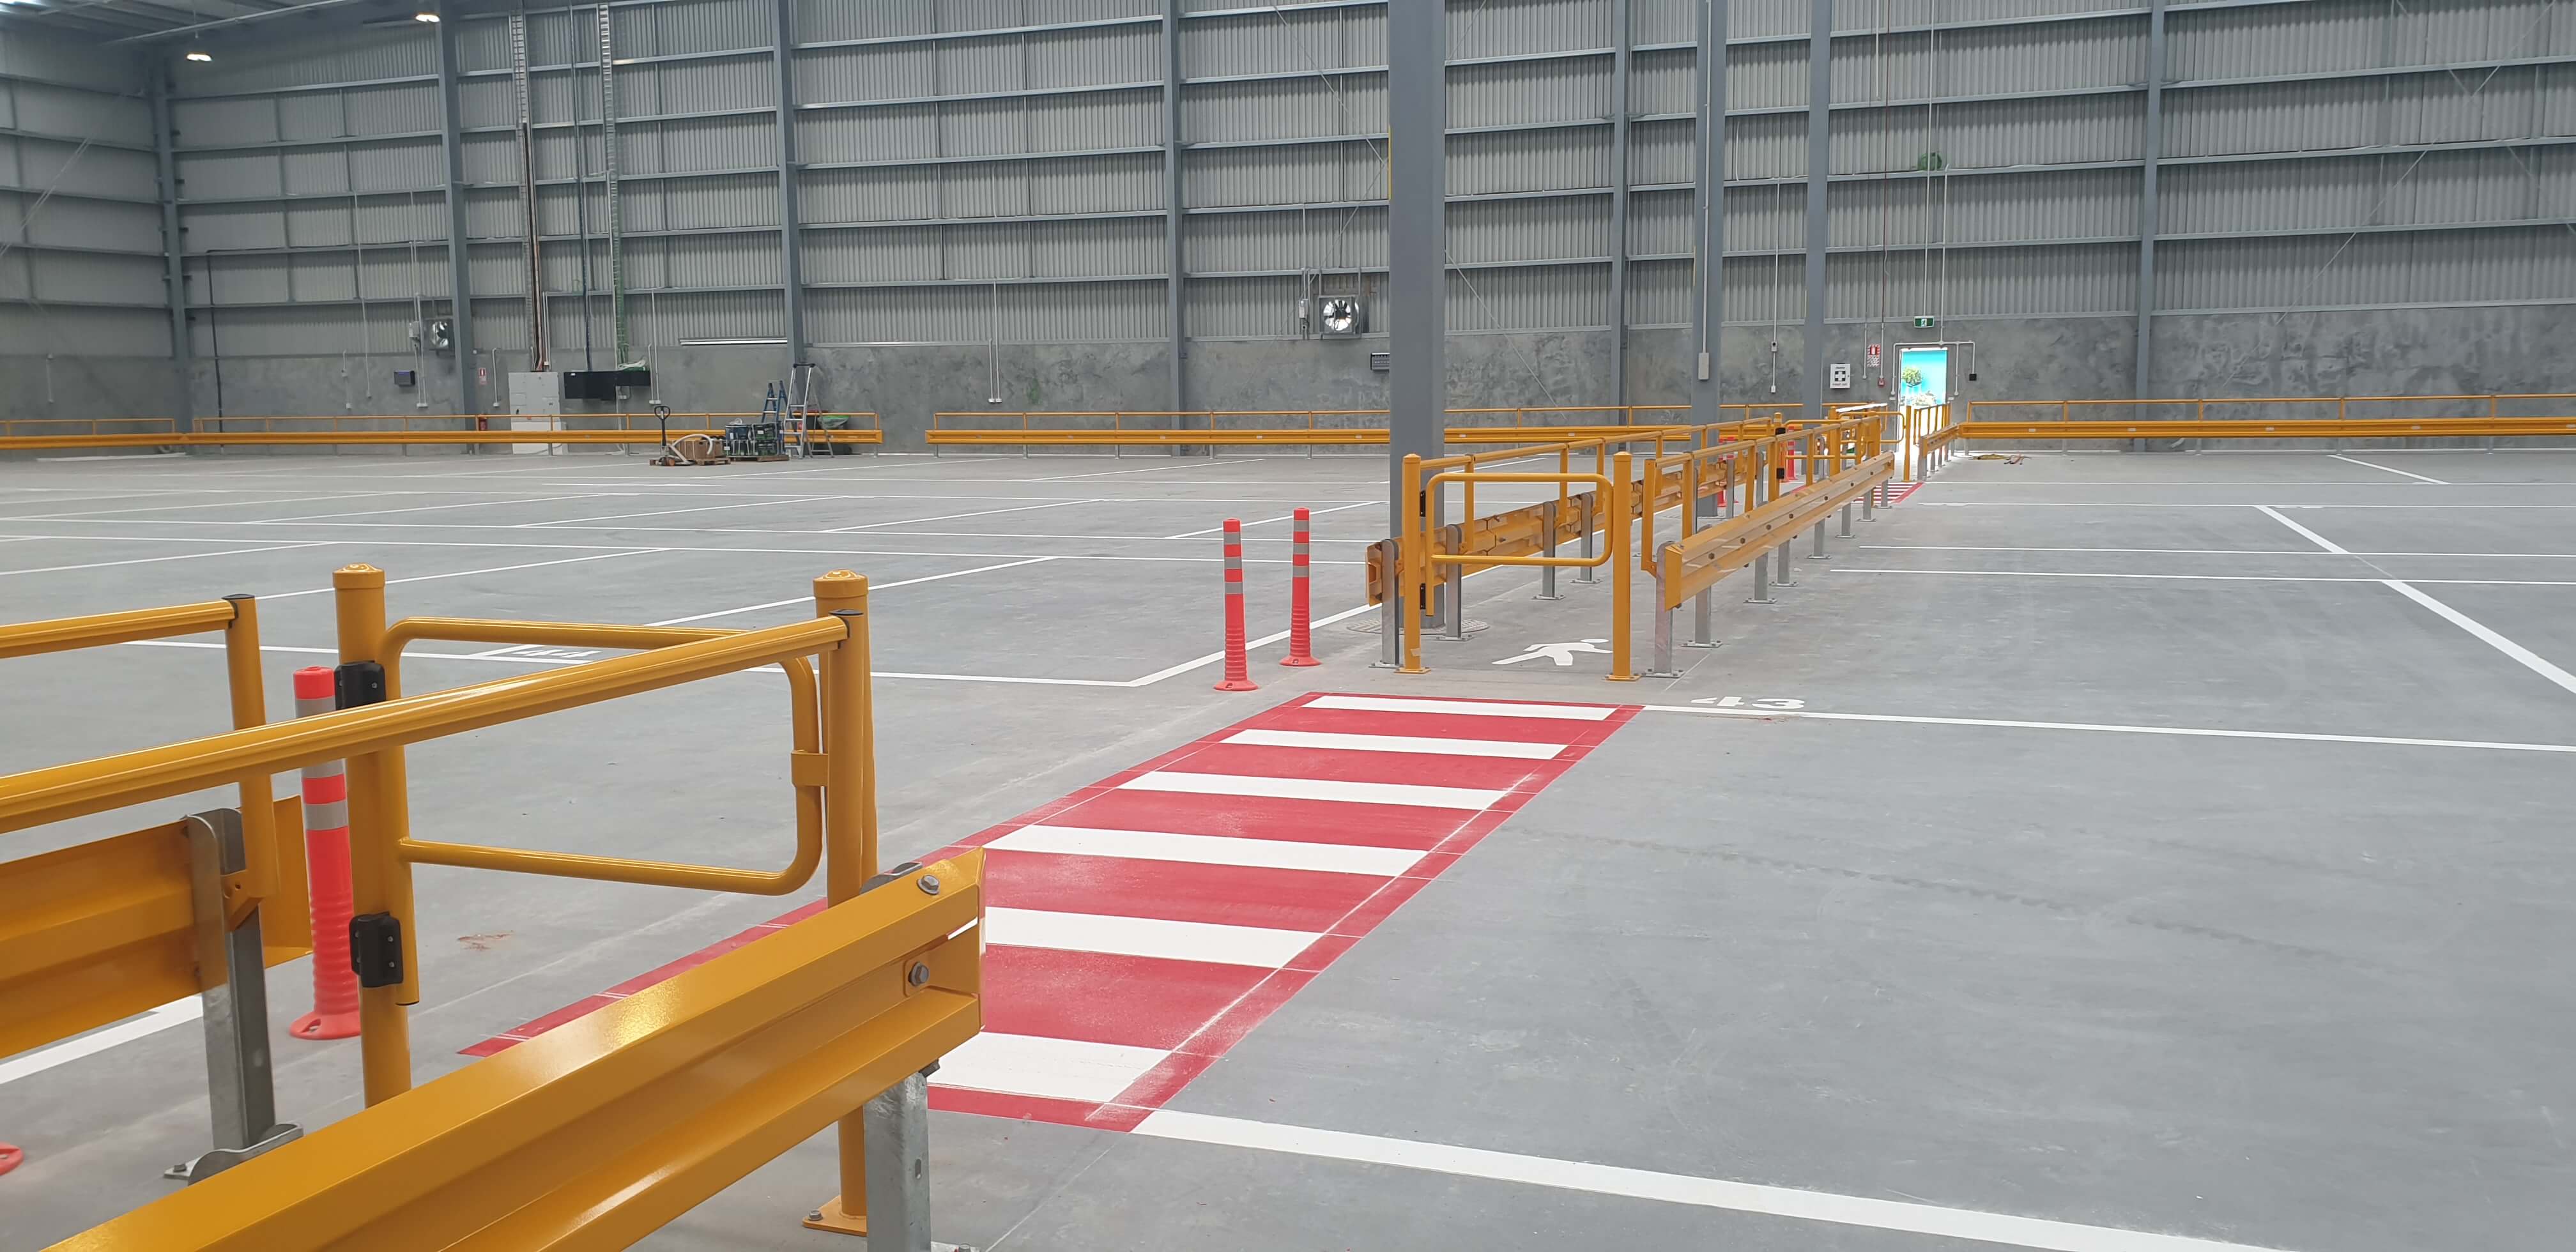 Warehouse pedestrian walkways with barriers